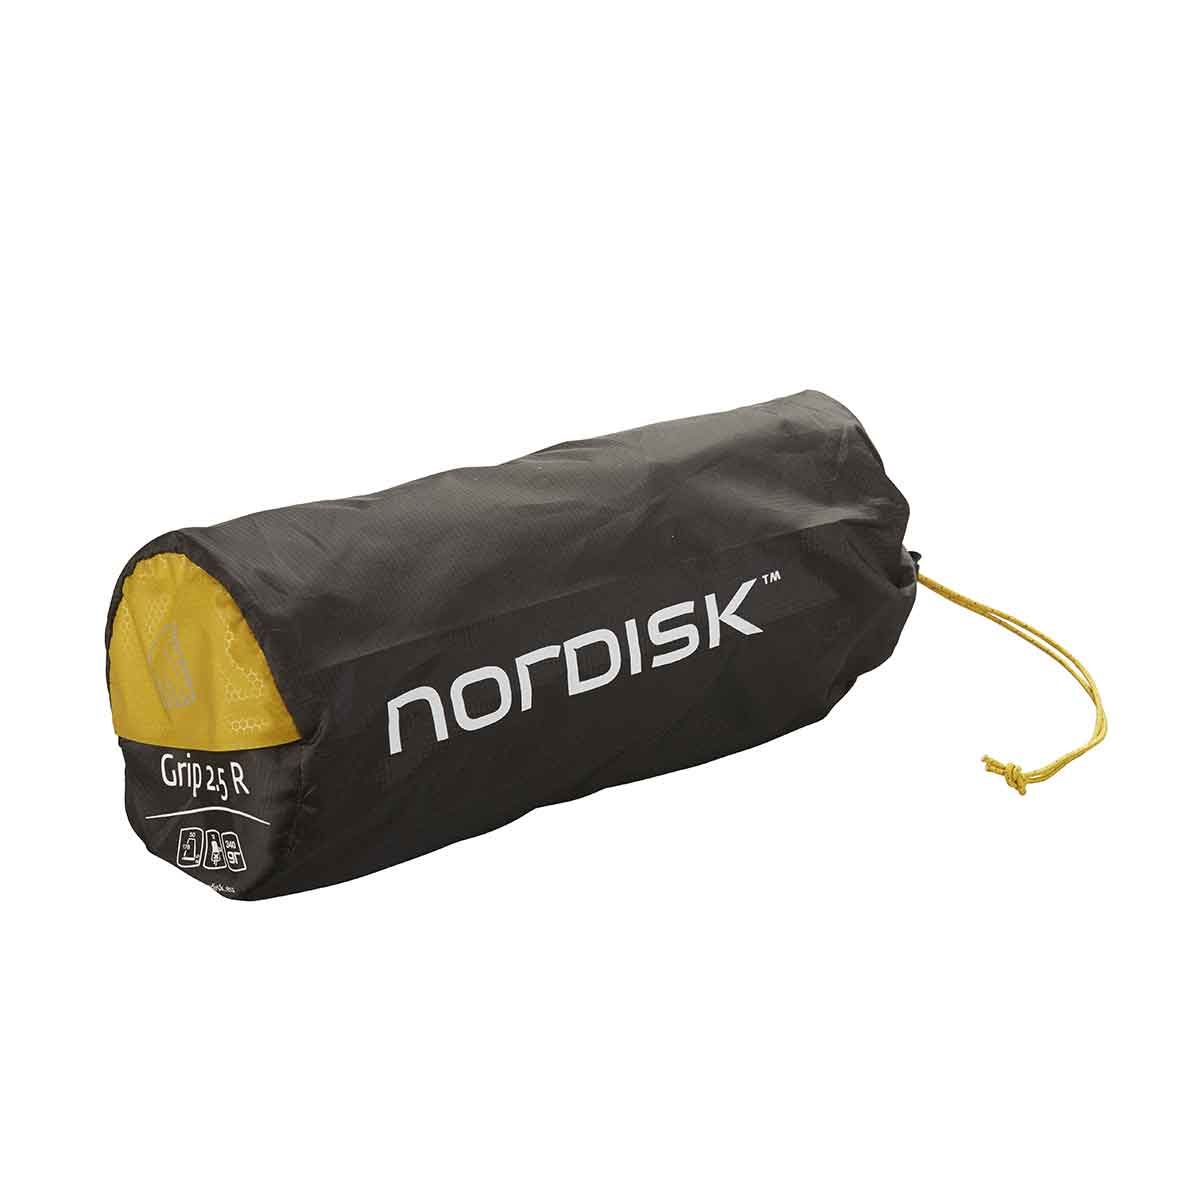 Nordisk Grip 2.5 self-inflating pad